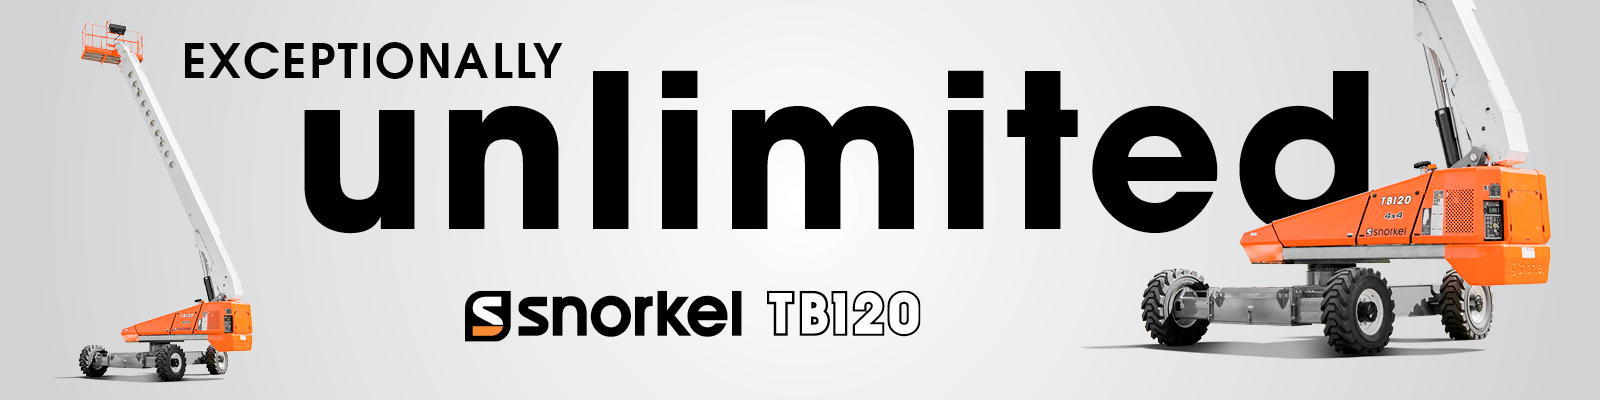 Exceptionally unlimited - Snorkel TB126J telescopic boom lift 